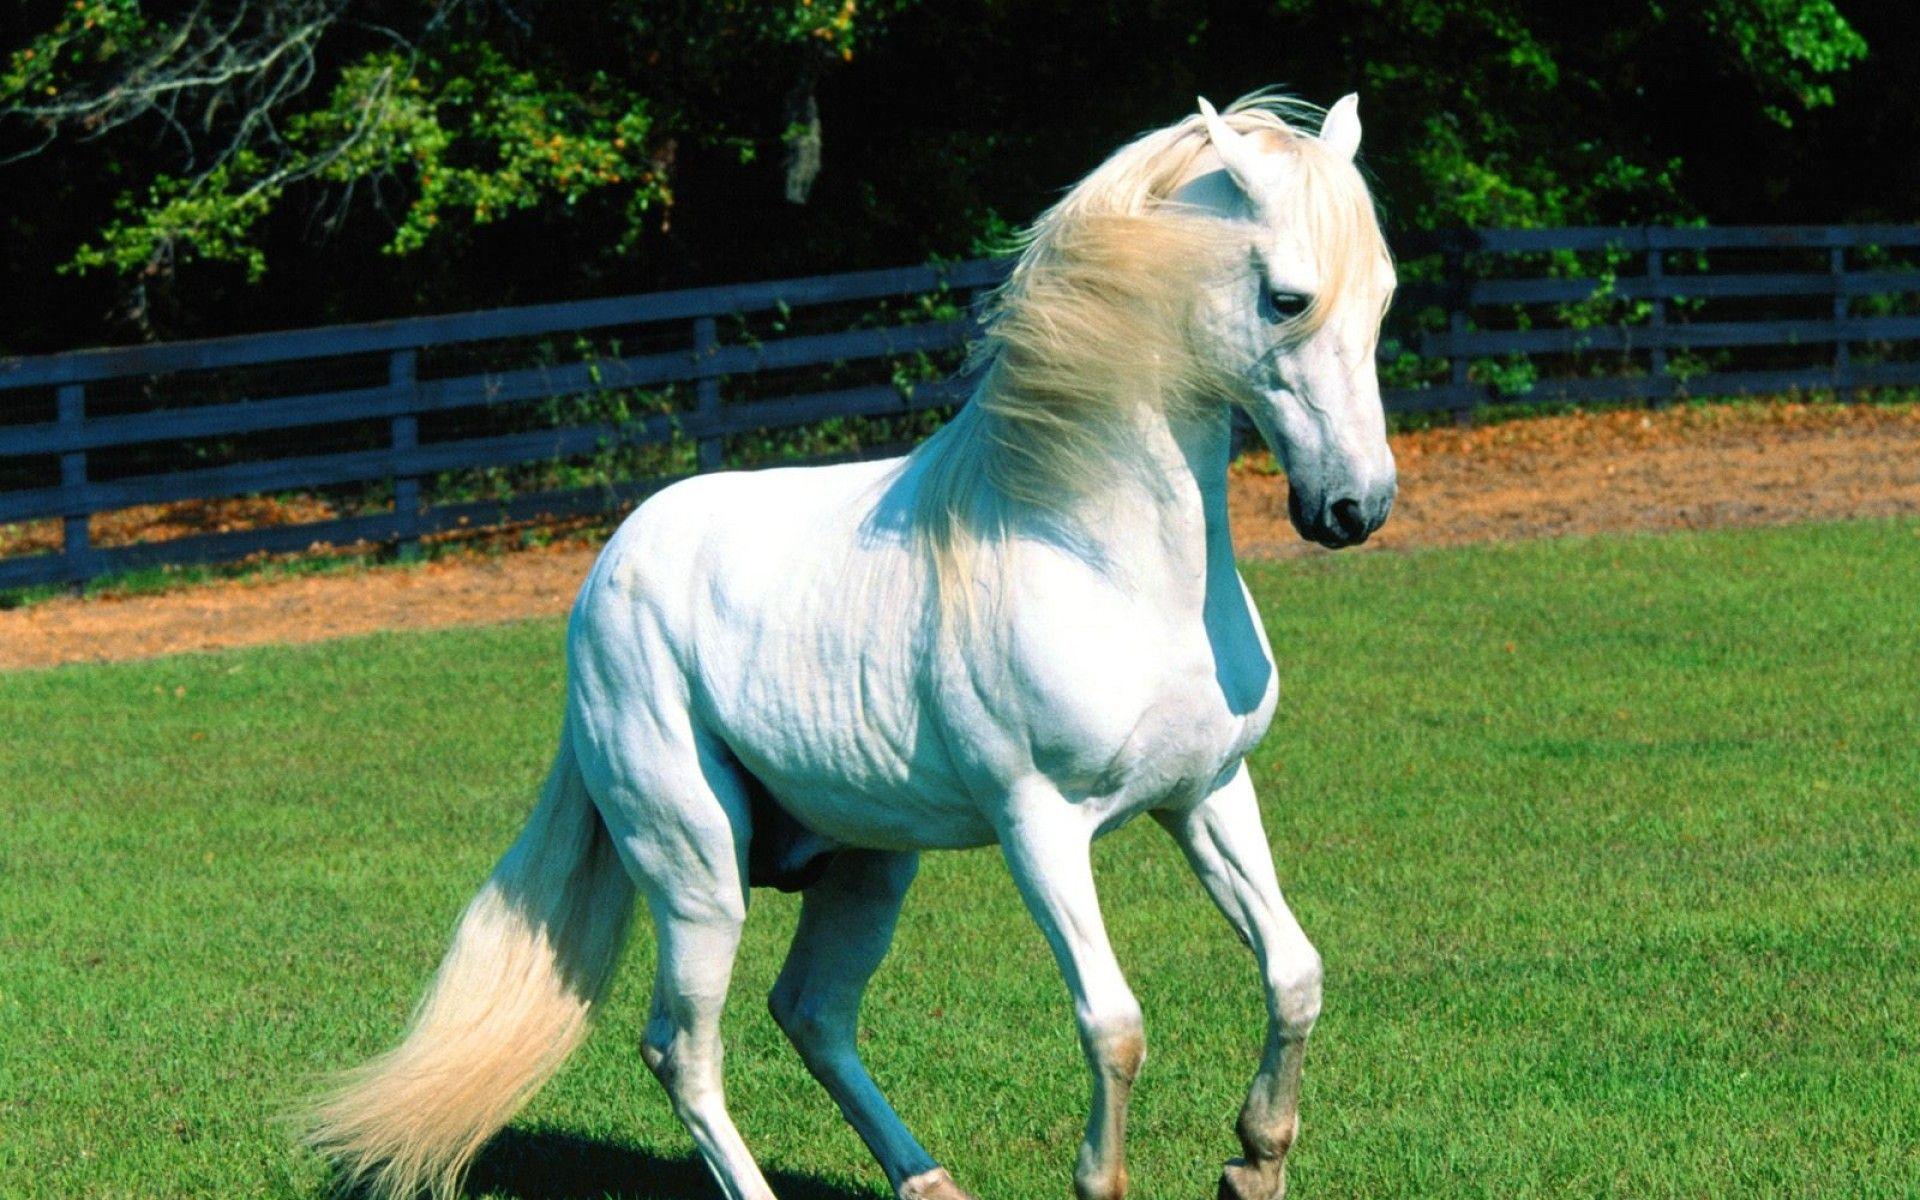 Beautiful White Horse Wallpaper HD 07659